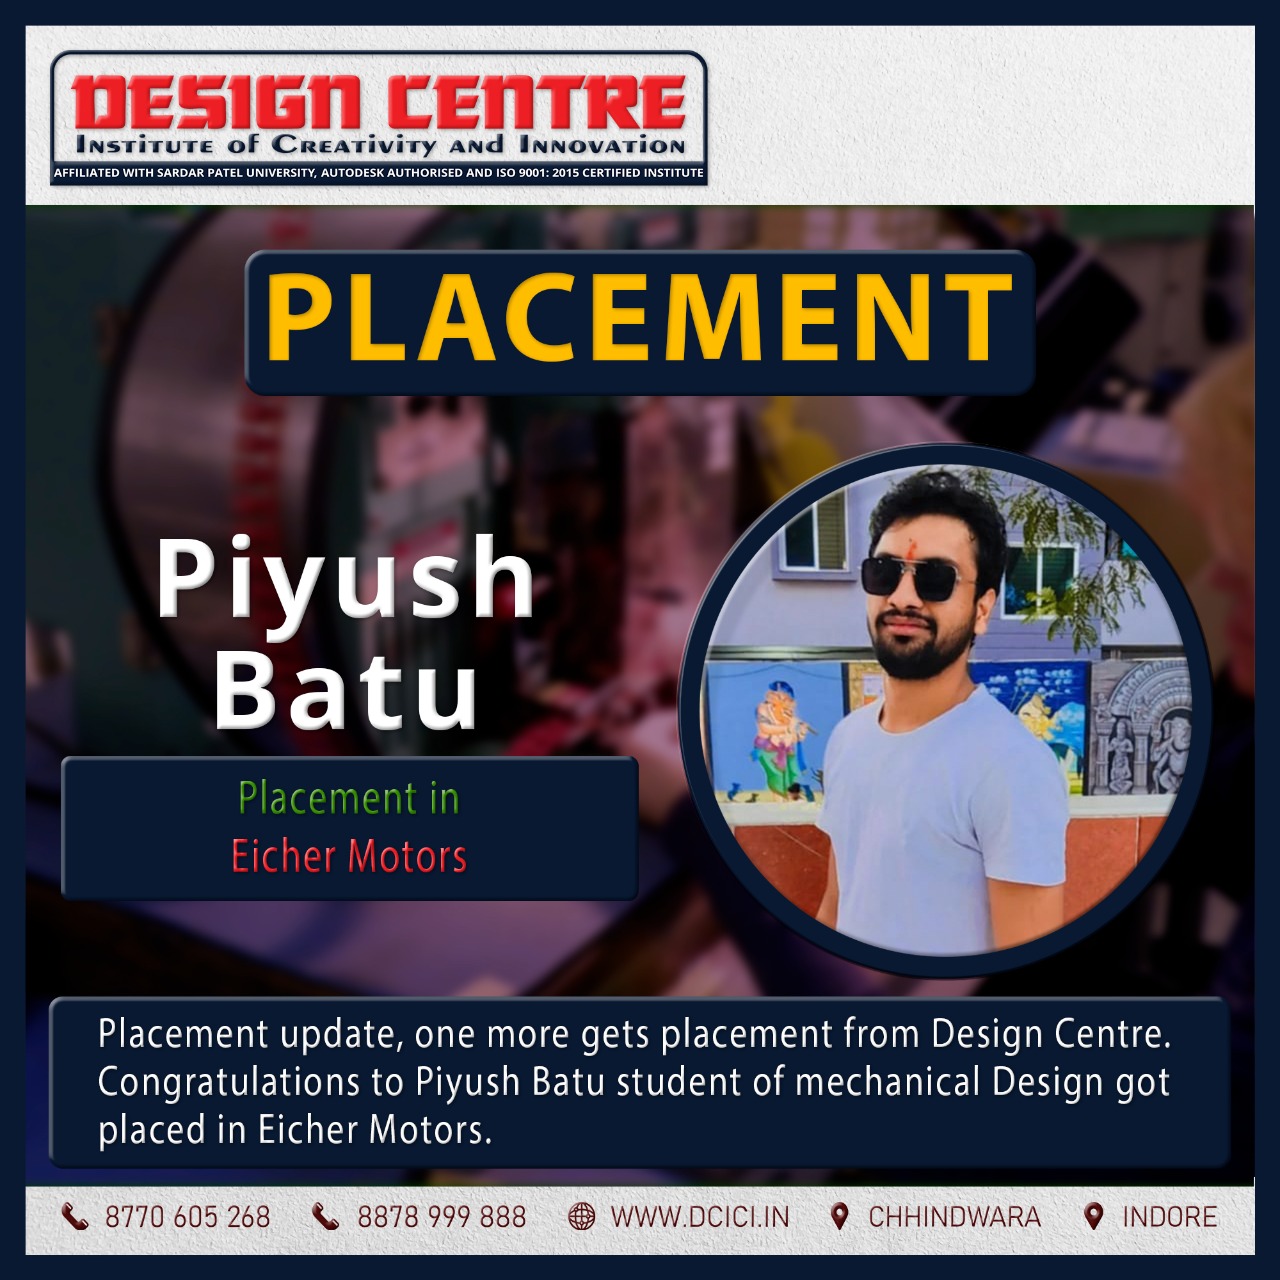 Piyush batu Student of Mechanical Design at Design Centre got placed in Eicher Motors